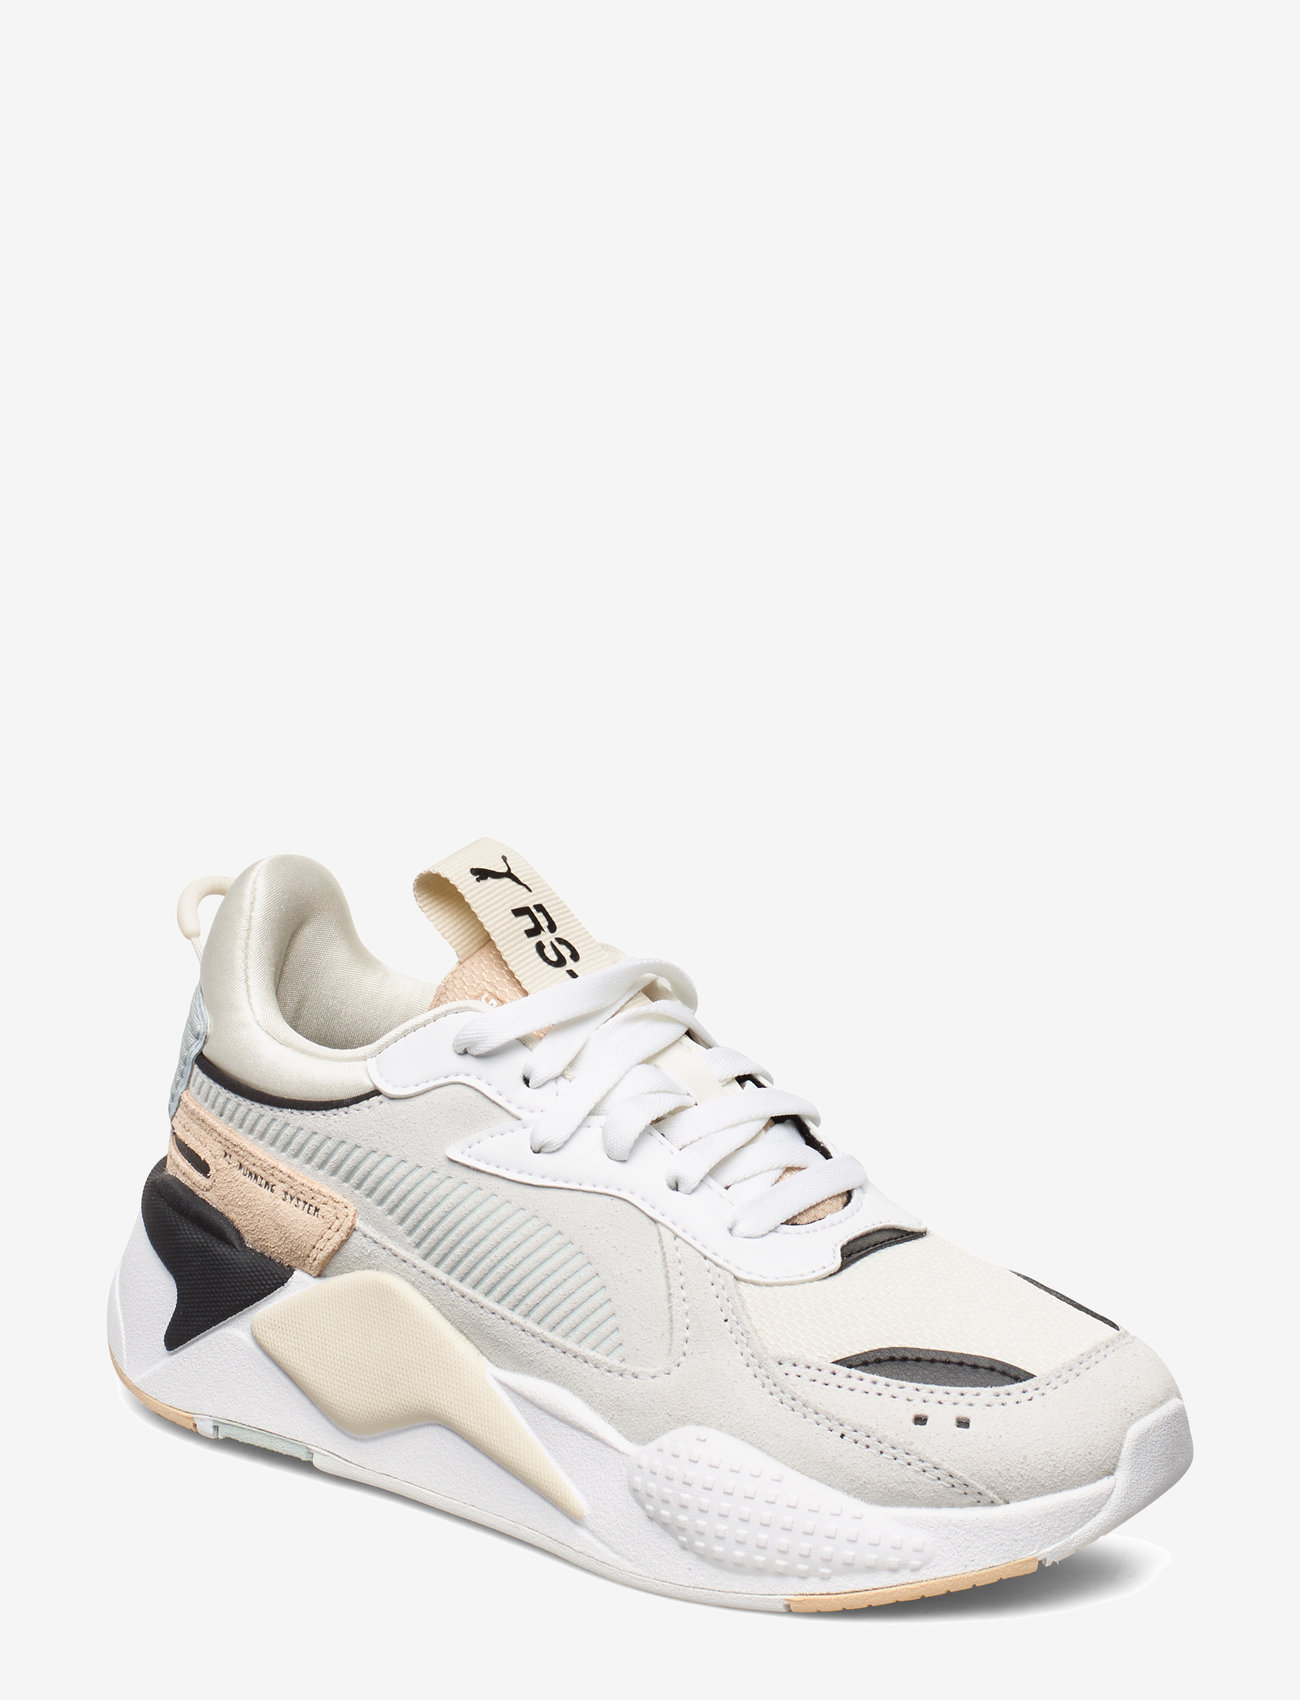 PUMA - RS-X Reinvent Wn s - low top sneakers - puma white-natural vachetta - 0